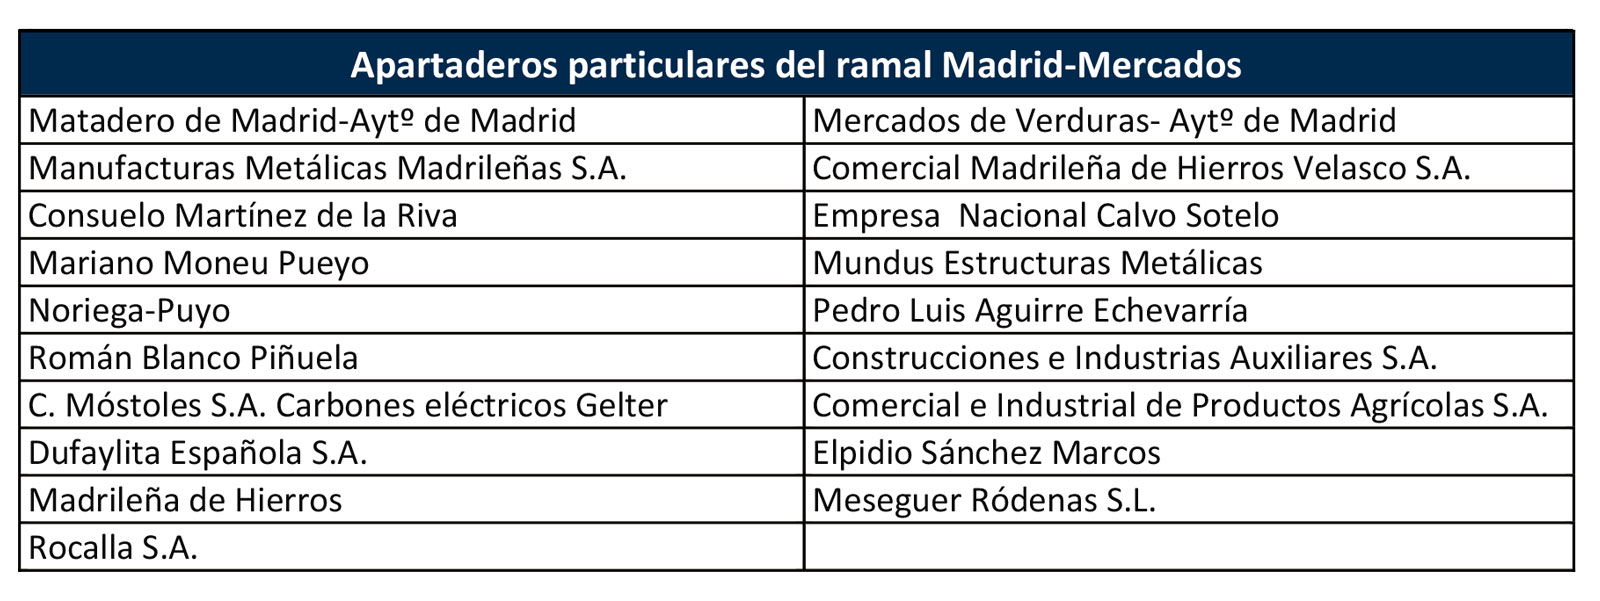 Apartaderos particulares del ramal Madrid-Mercados. <i>Fuente:</i> Juan Peris Torner